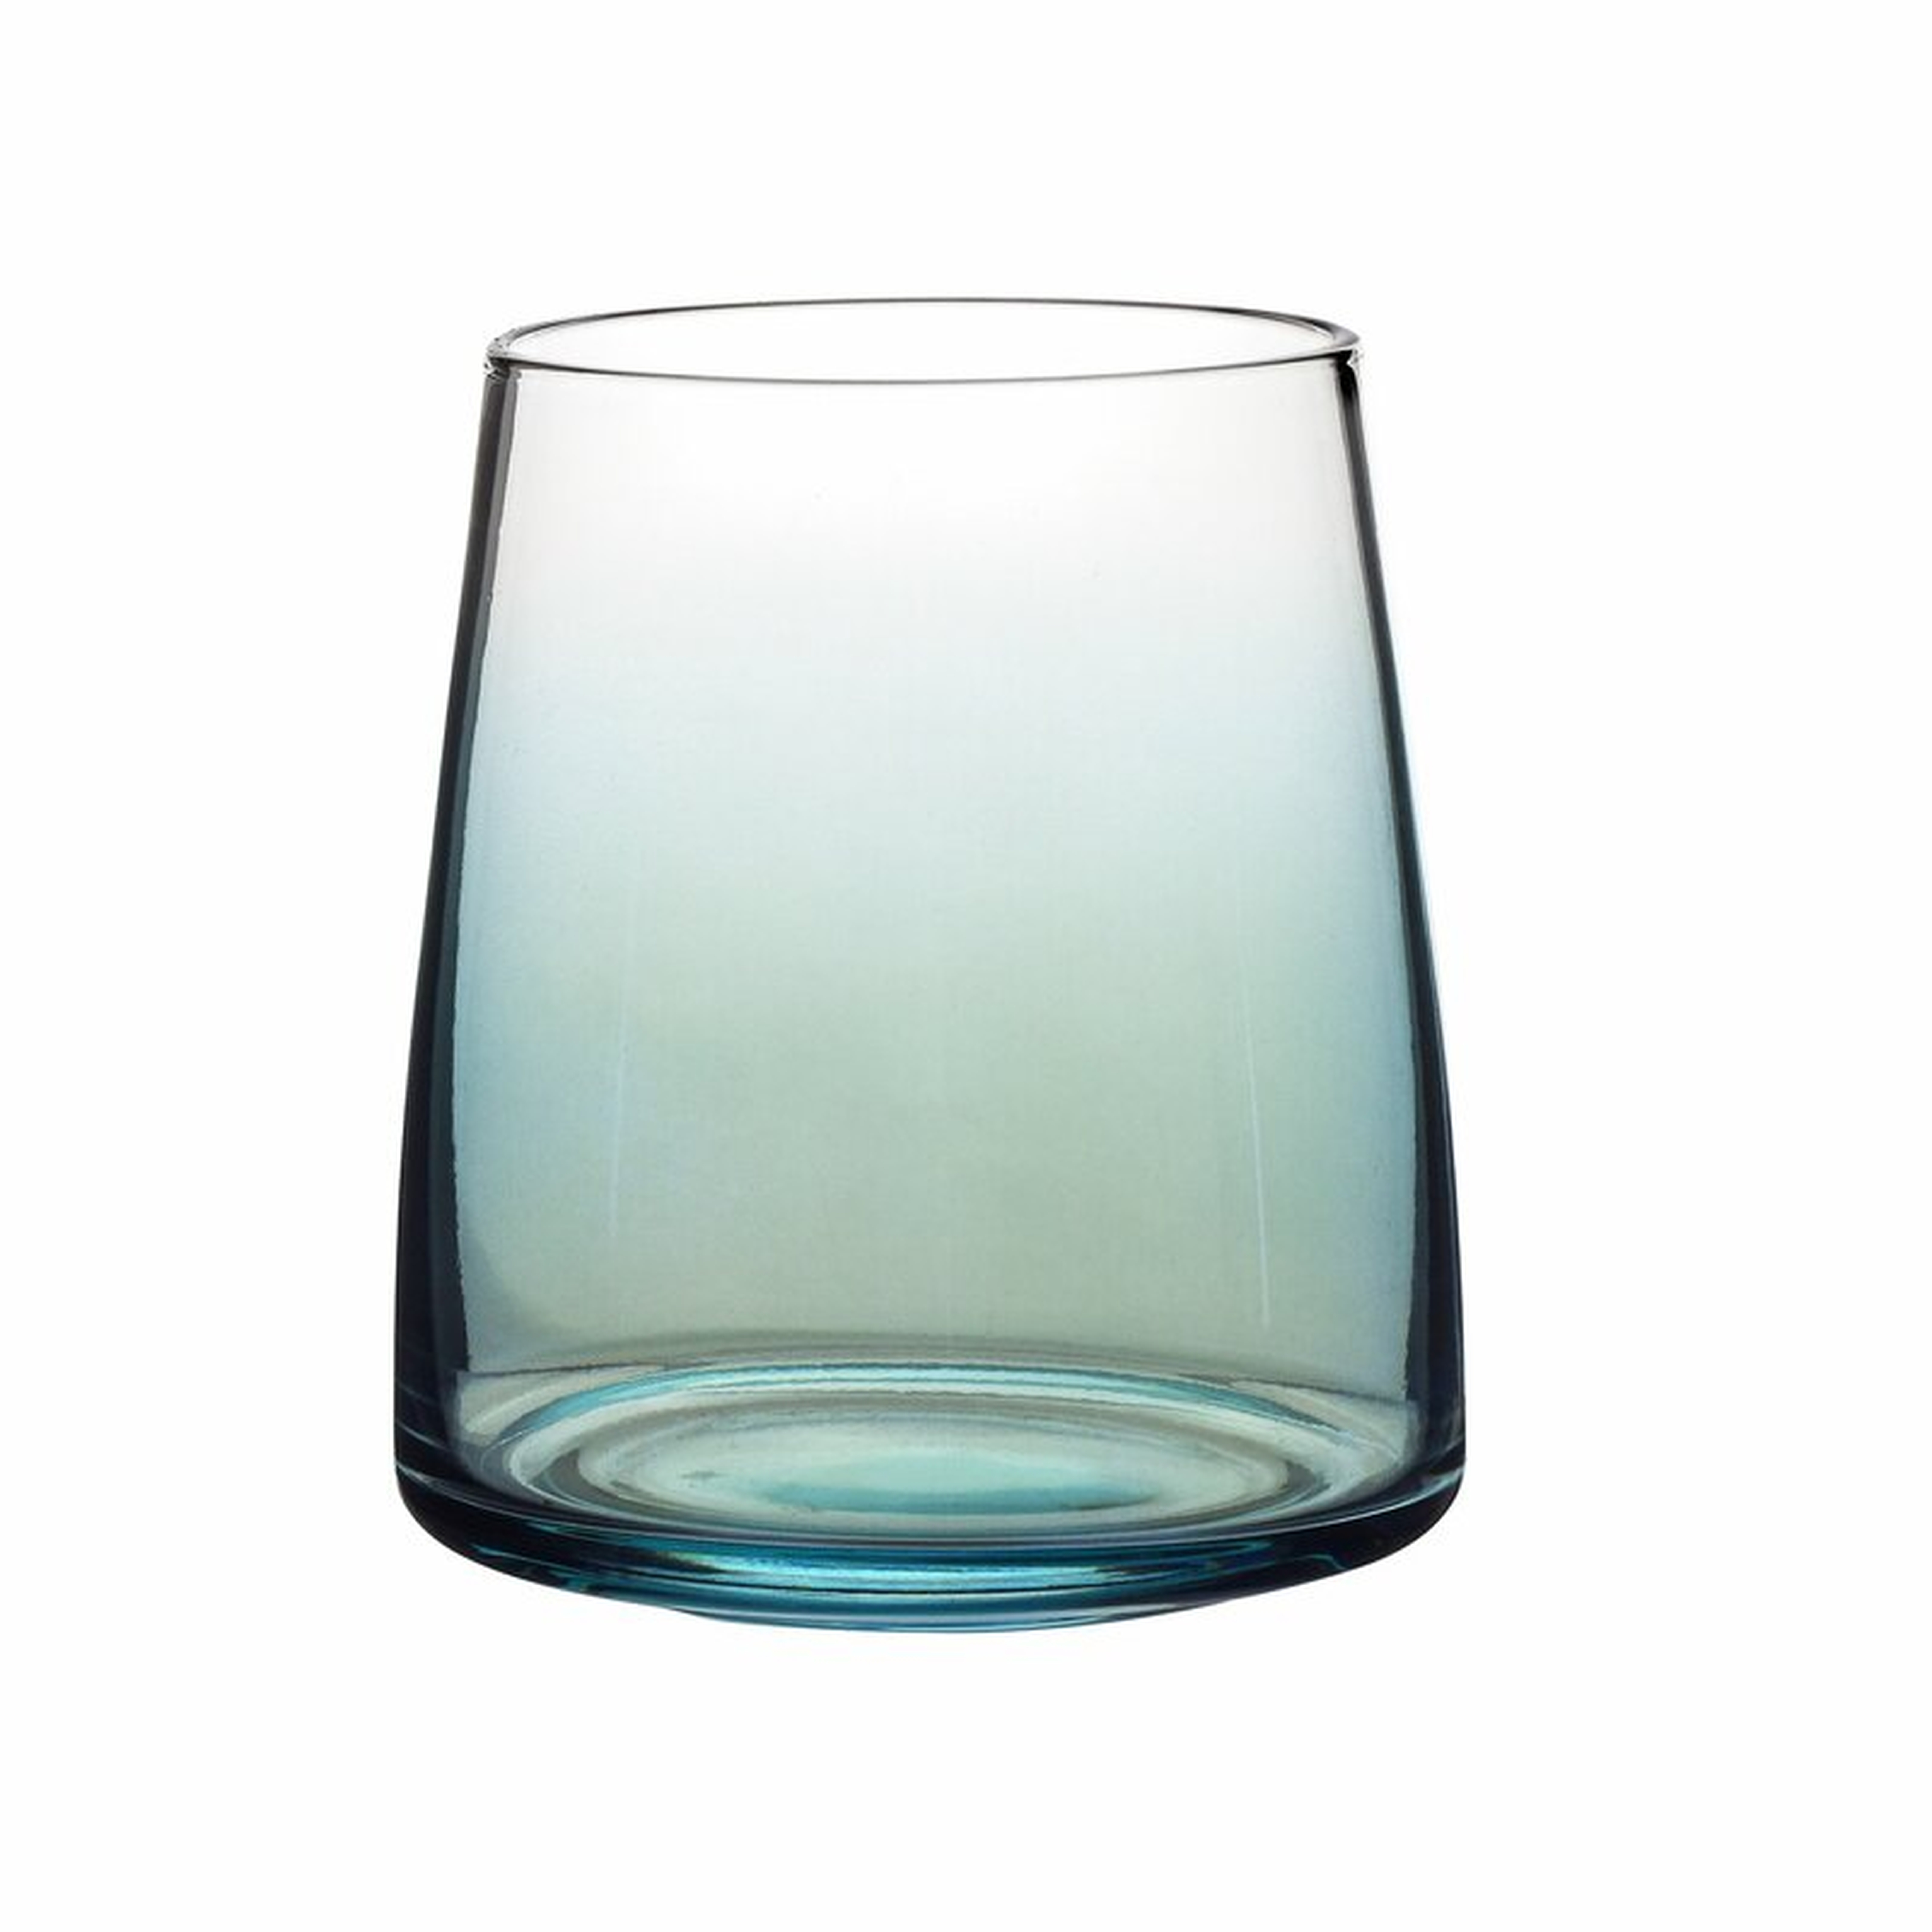 Atrium 13 oz. Stemless Wine Glass (set of 4) - Wayfair